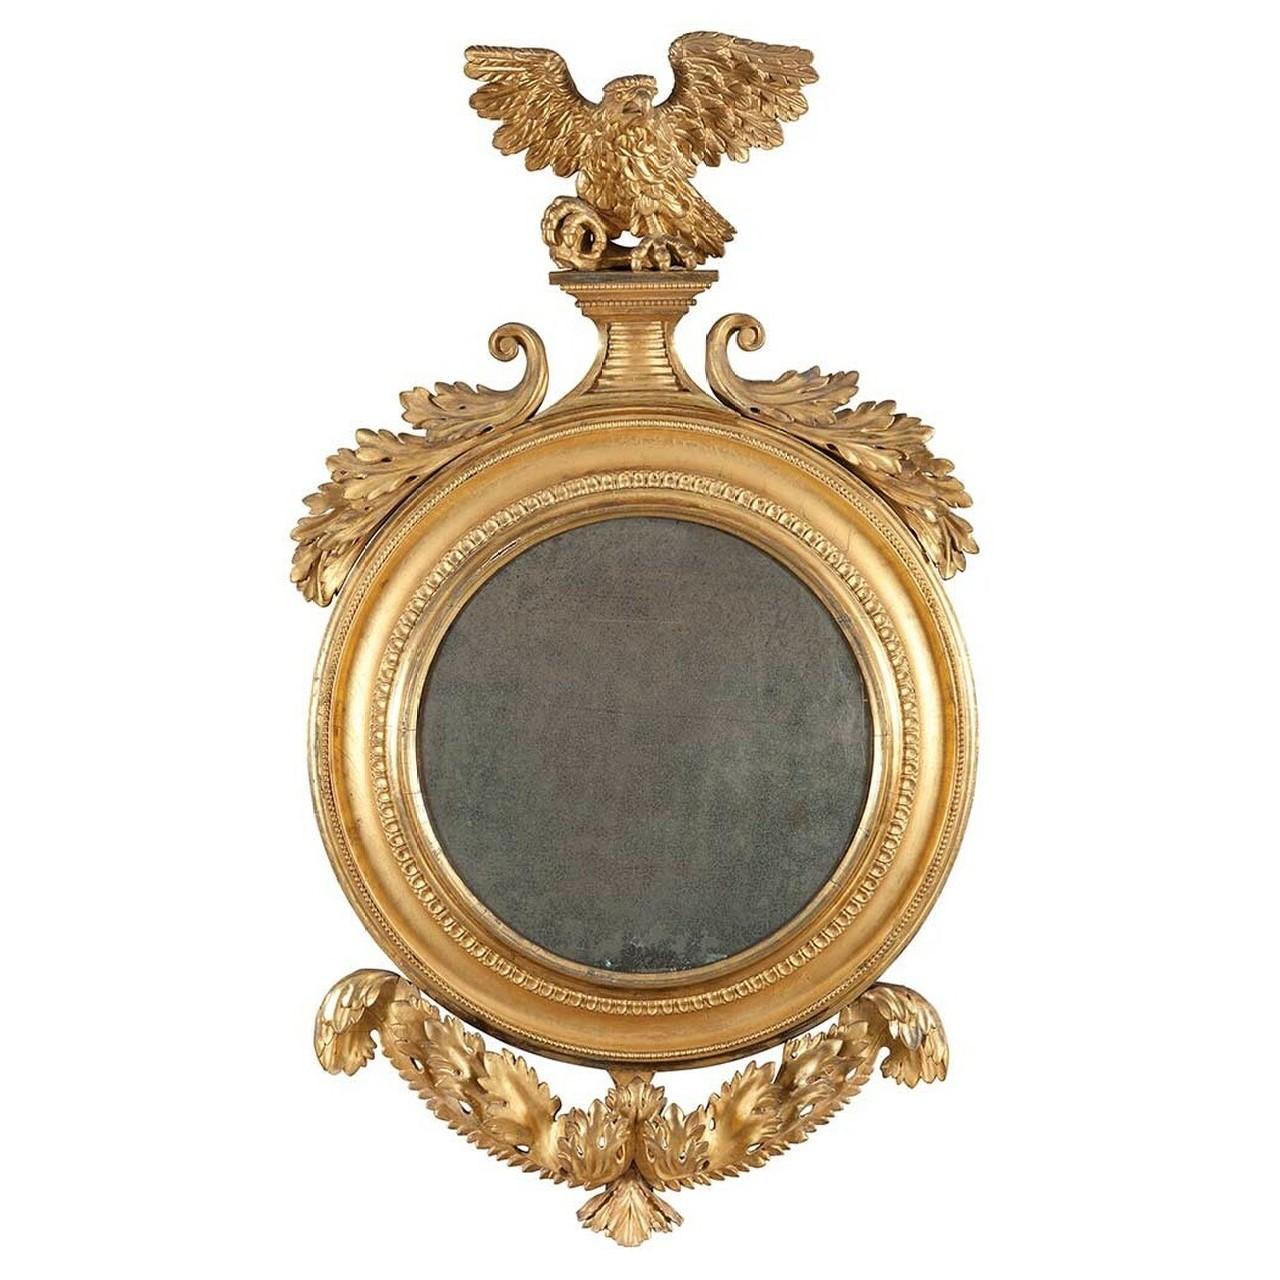 Federal 1820 Giltwood High Quality Convex mirror.

Approx 52